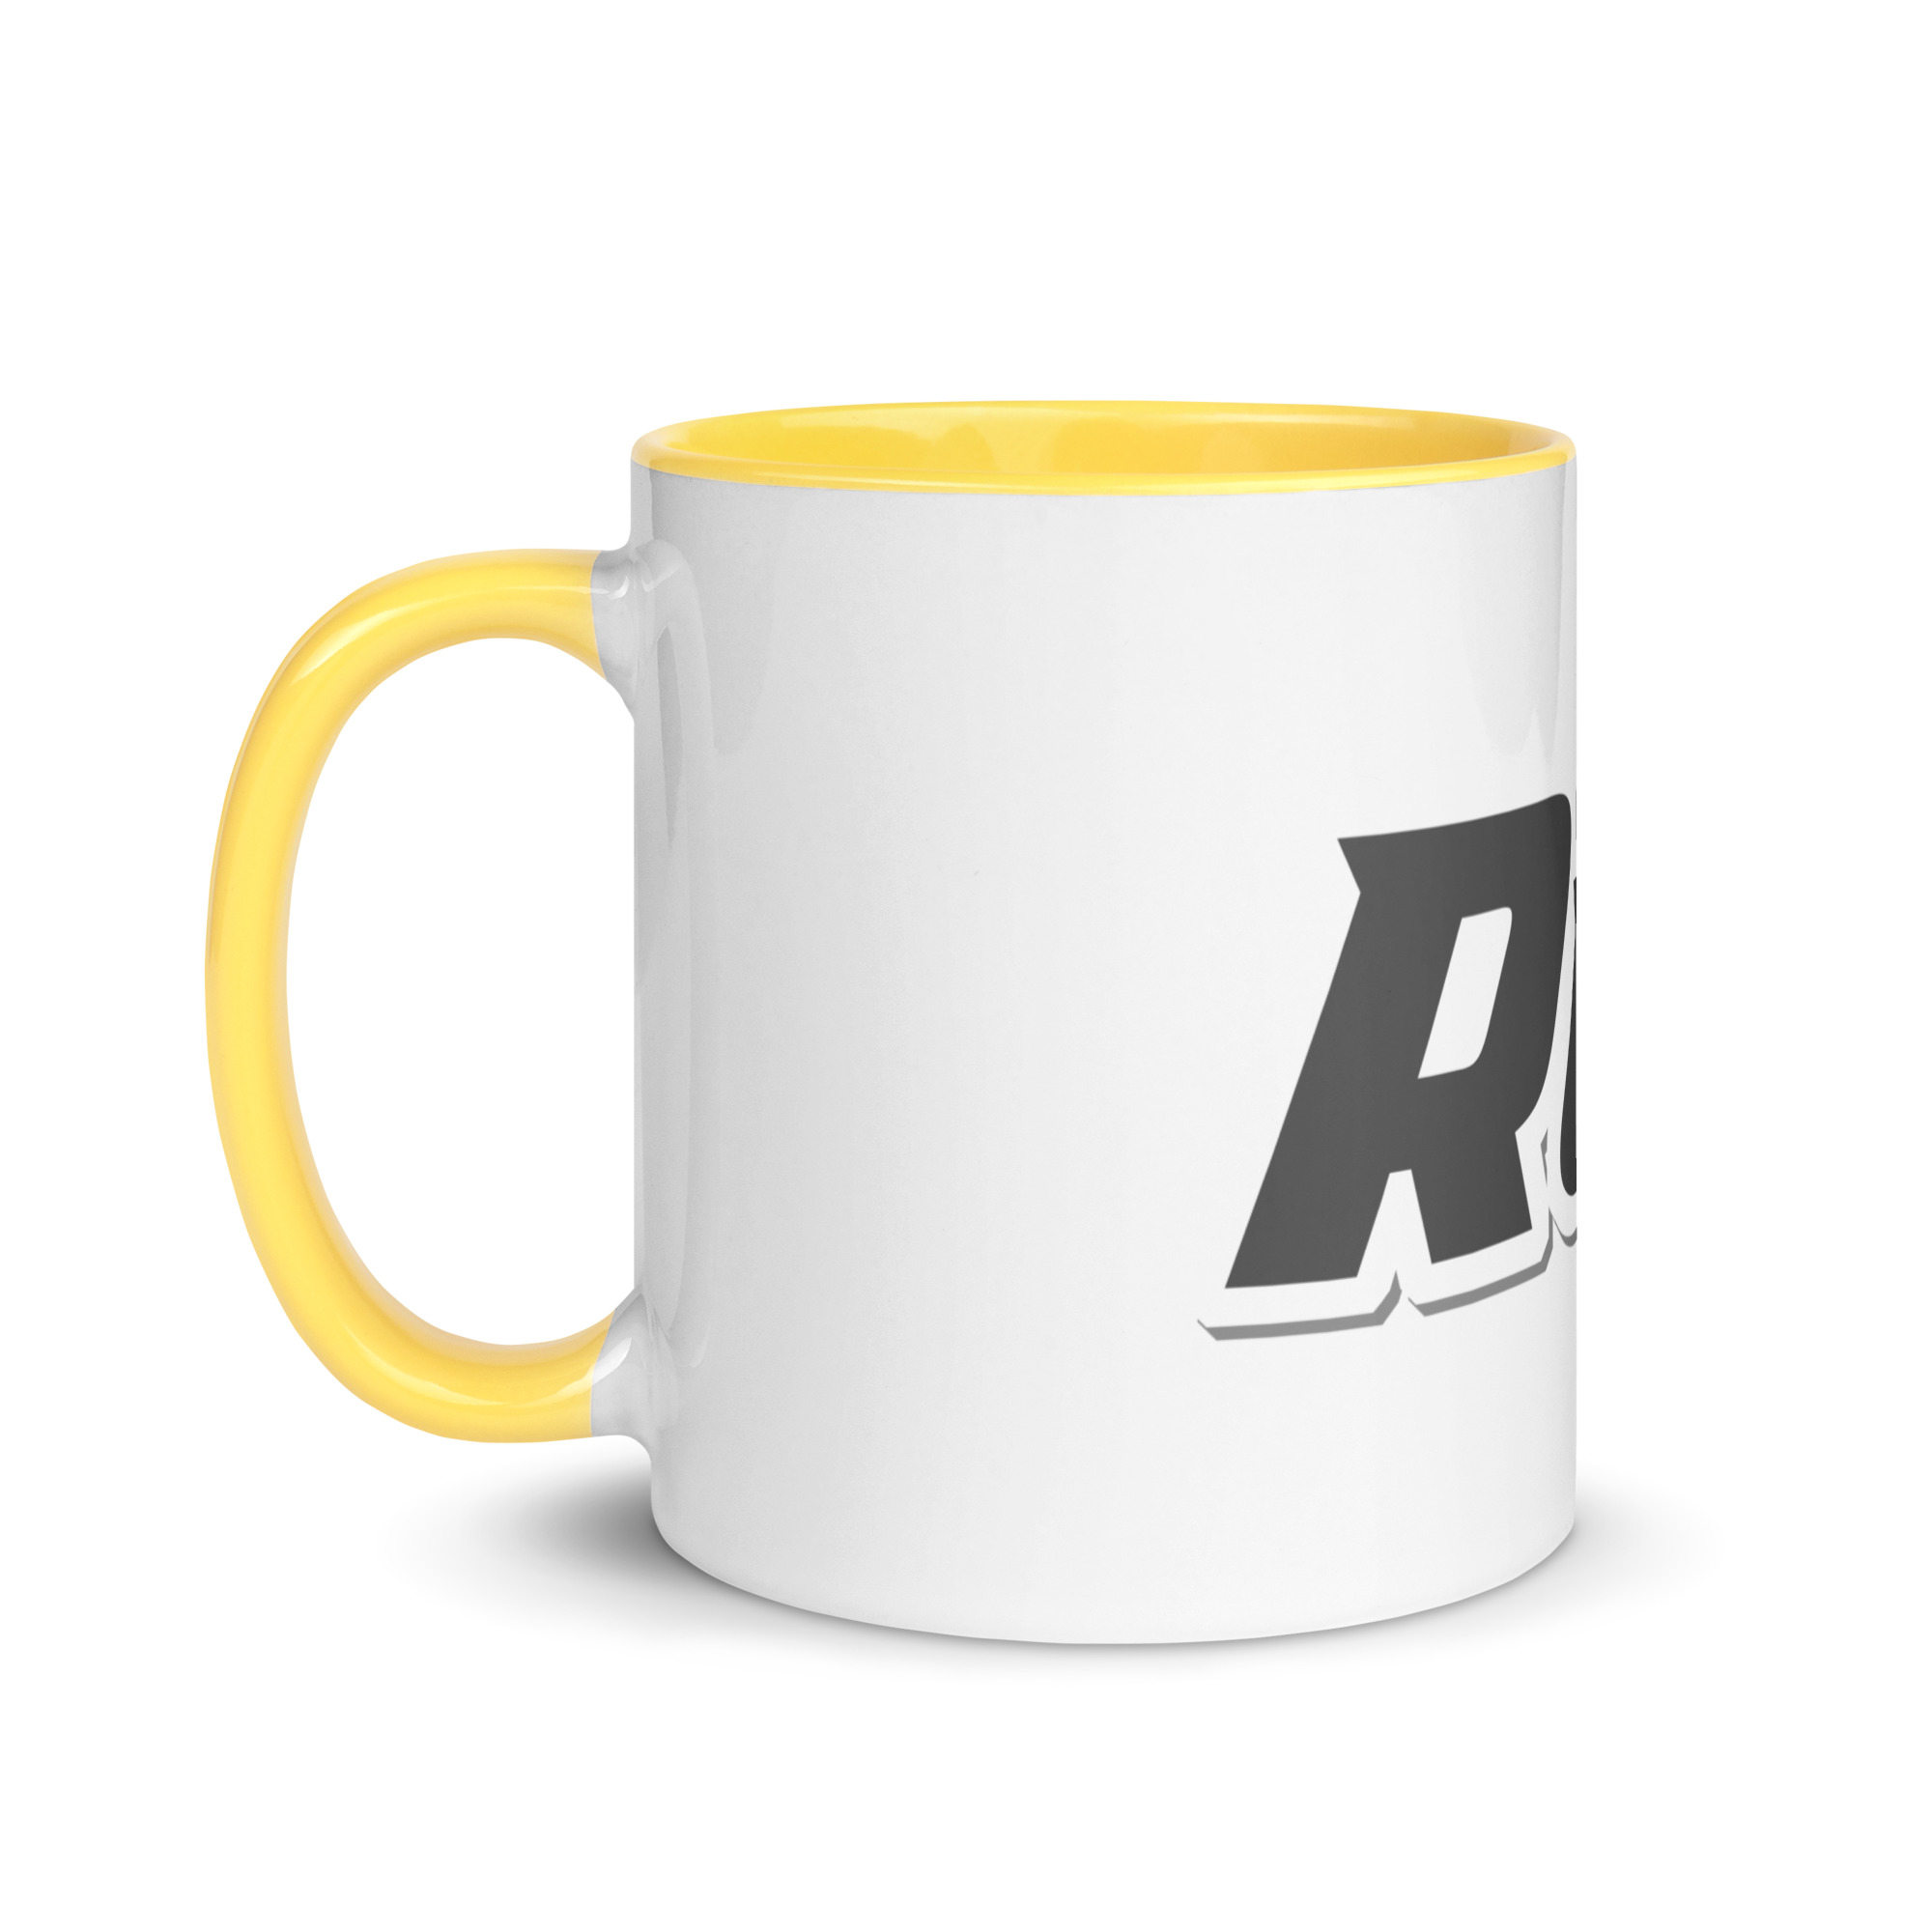 white-ceramic-mug-with-color-inside-yellow-11-oz-left-6525b50609622.jpg